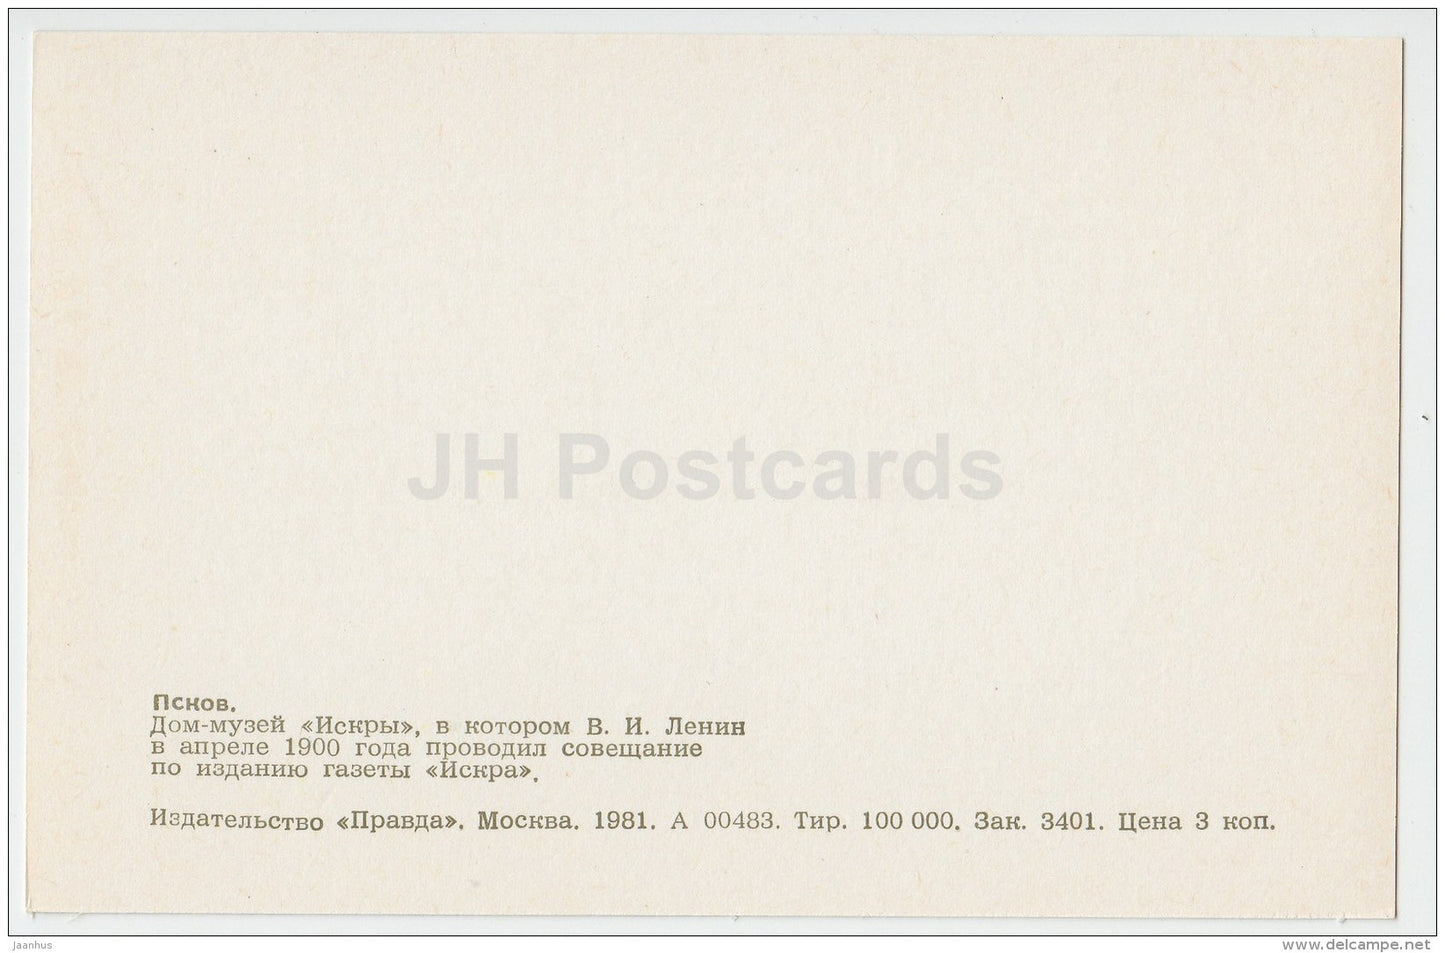 Iskra newspaper home-museum - Pskov - 1981 - Russia USSR - unused - JH Postcards